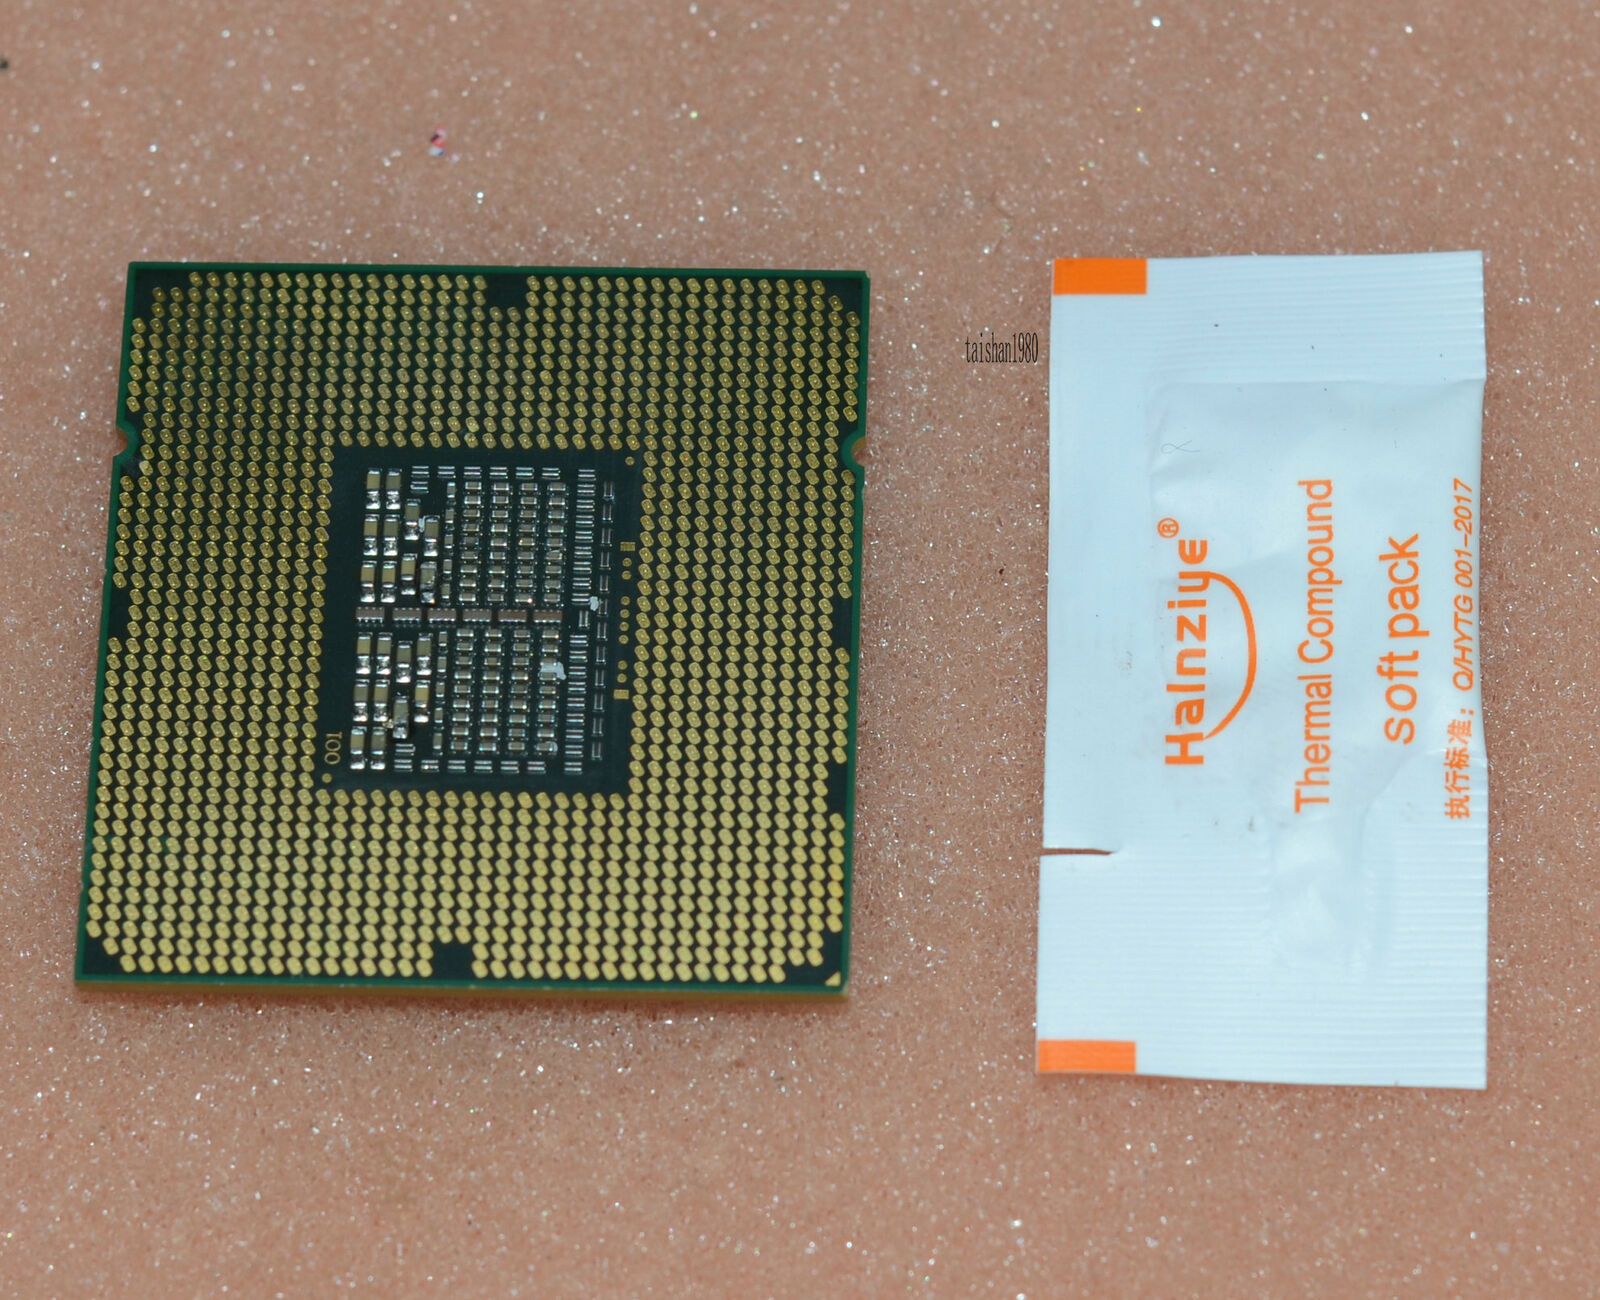 Intel Xeon W3530 2.8GHz Quad-Core (BX80601W3530) Processor for 